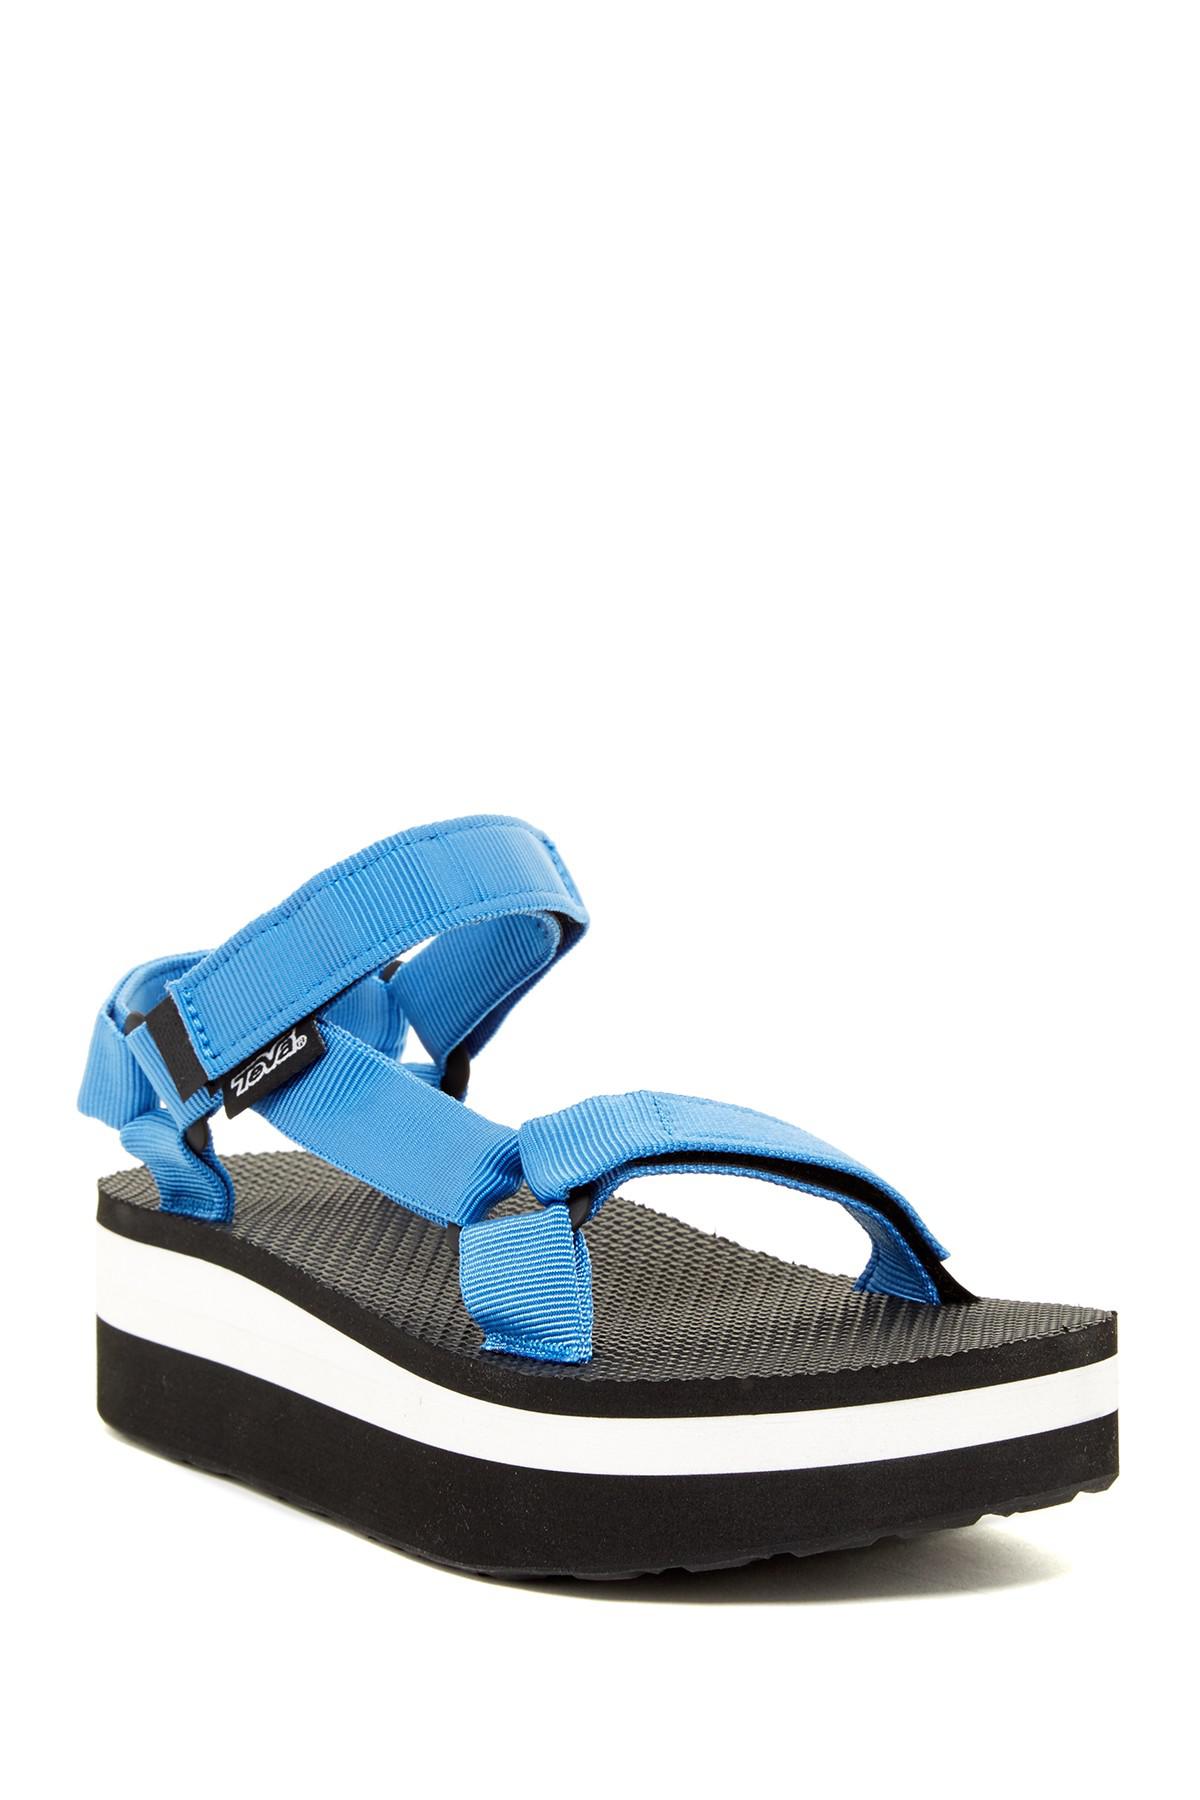 Teva Flatform Universal Sandal in French Blue (Blue) - Lyst